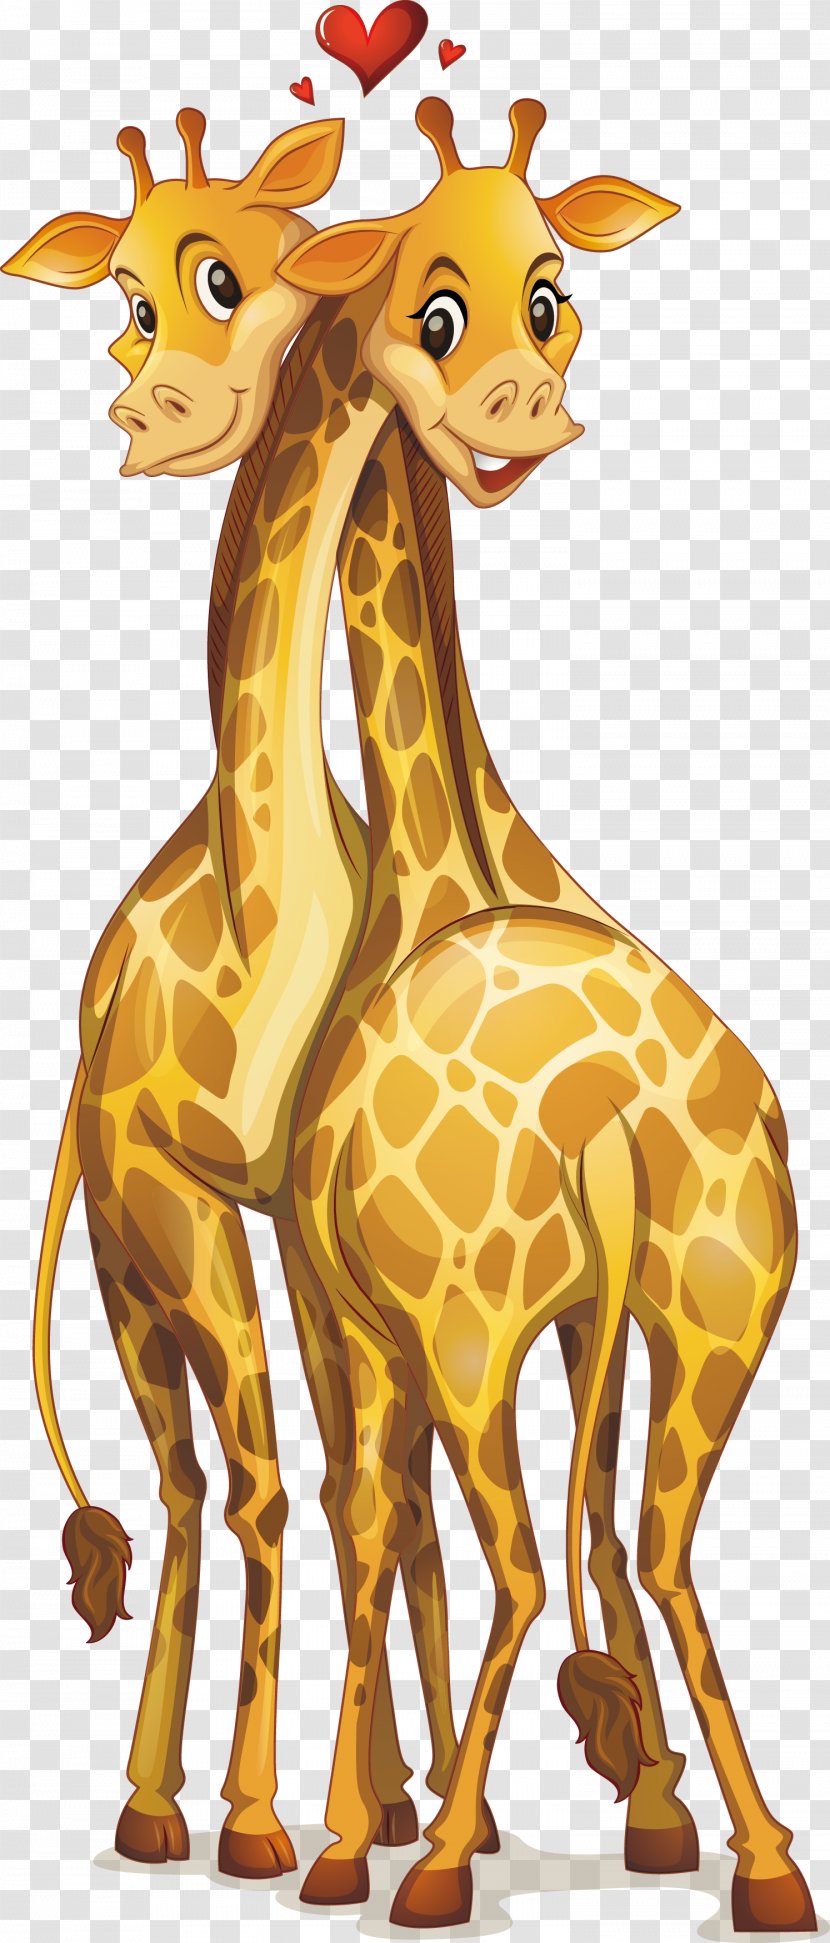 Giraffe Cartoon Royalty-free Illustration - Organism - A Pair Of Giraffes Transparent PNG